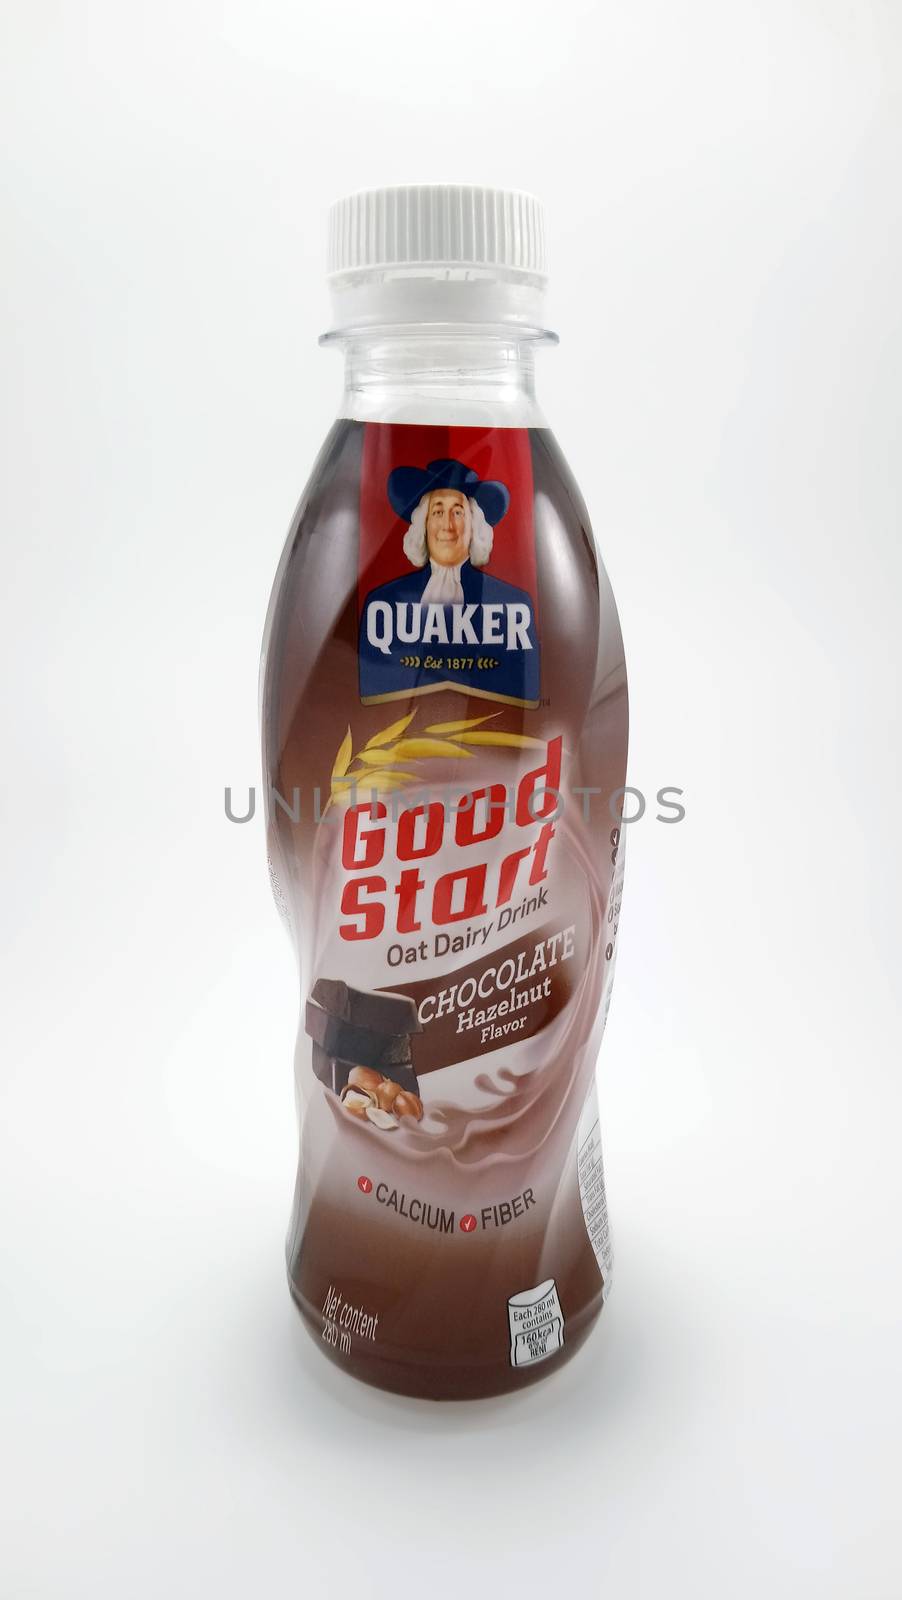 MANILA, PH - JUNE 23 - Quaker good start oat dairy drink chocolate hazelnut flavor bottle on June 23, 2020 in Manila, Philippines.